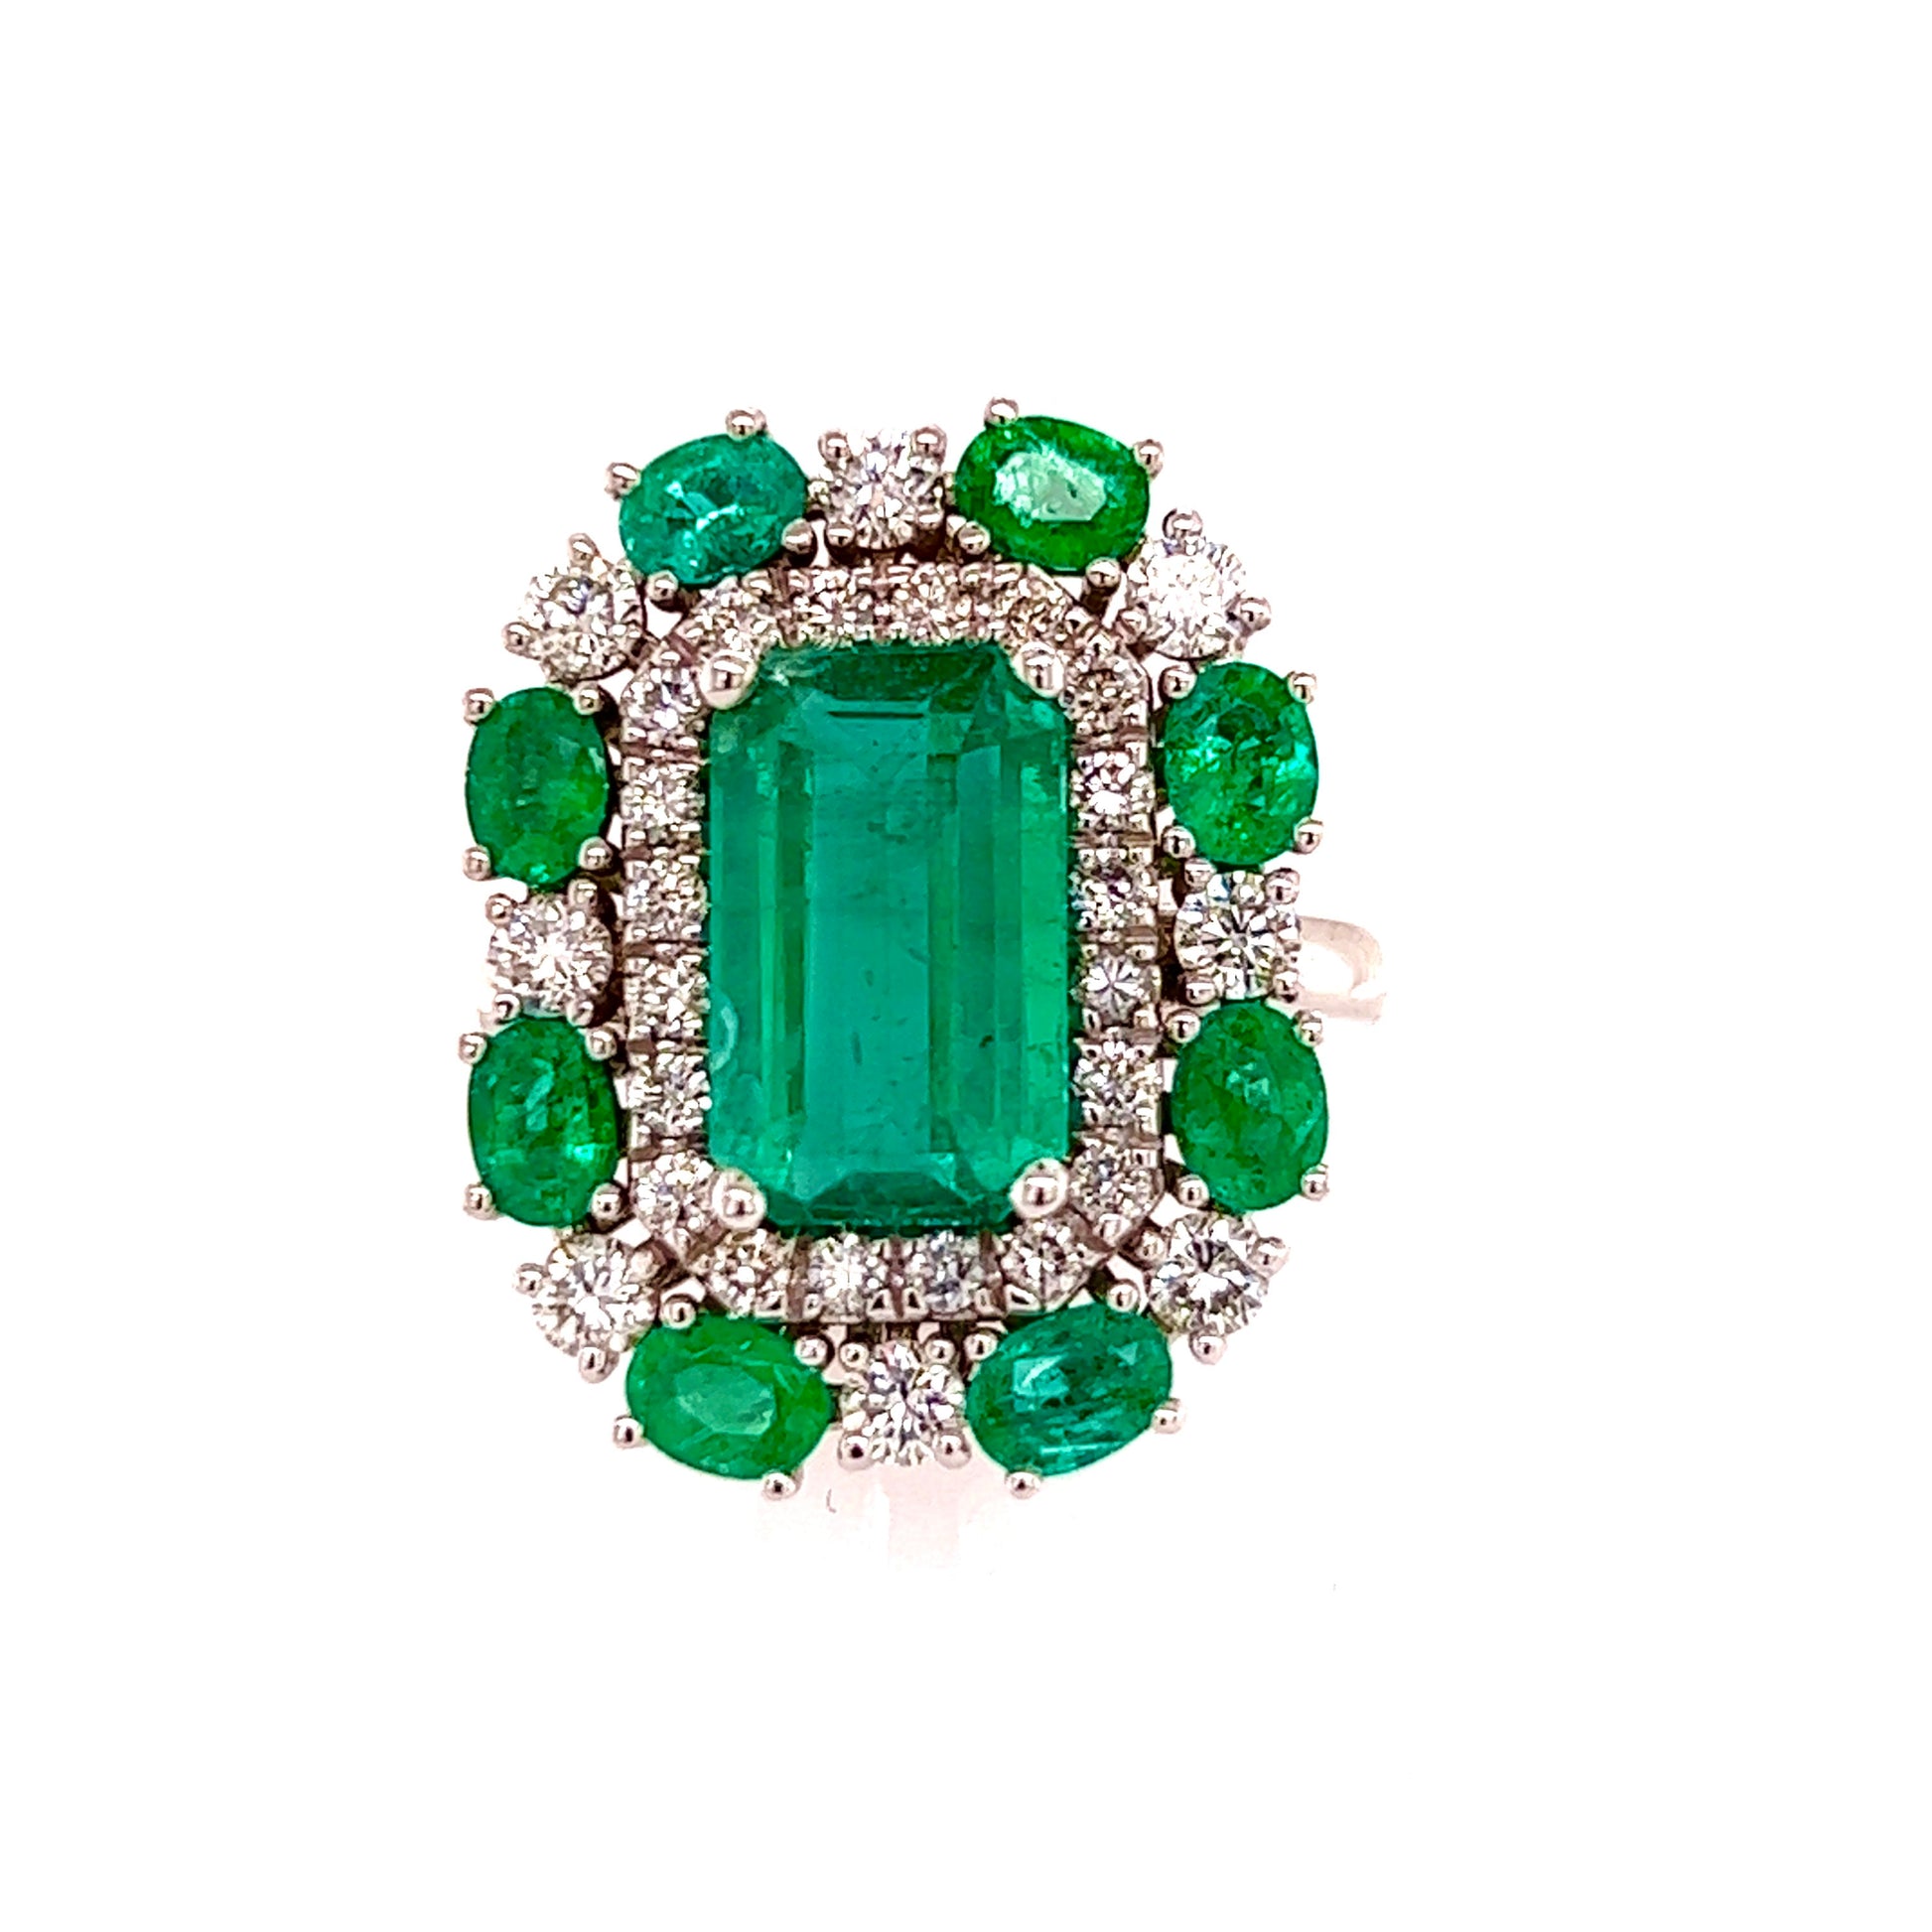 Natural Emerald Diamond Ring 6.5 14k Gold 4.52 TCW GIA Certified $12,950 210738 - Certified Fine Jewelry